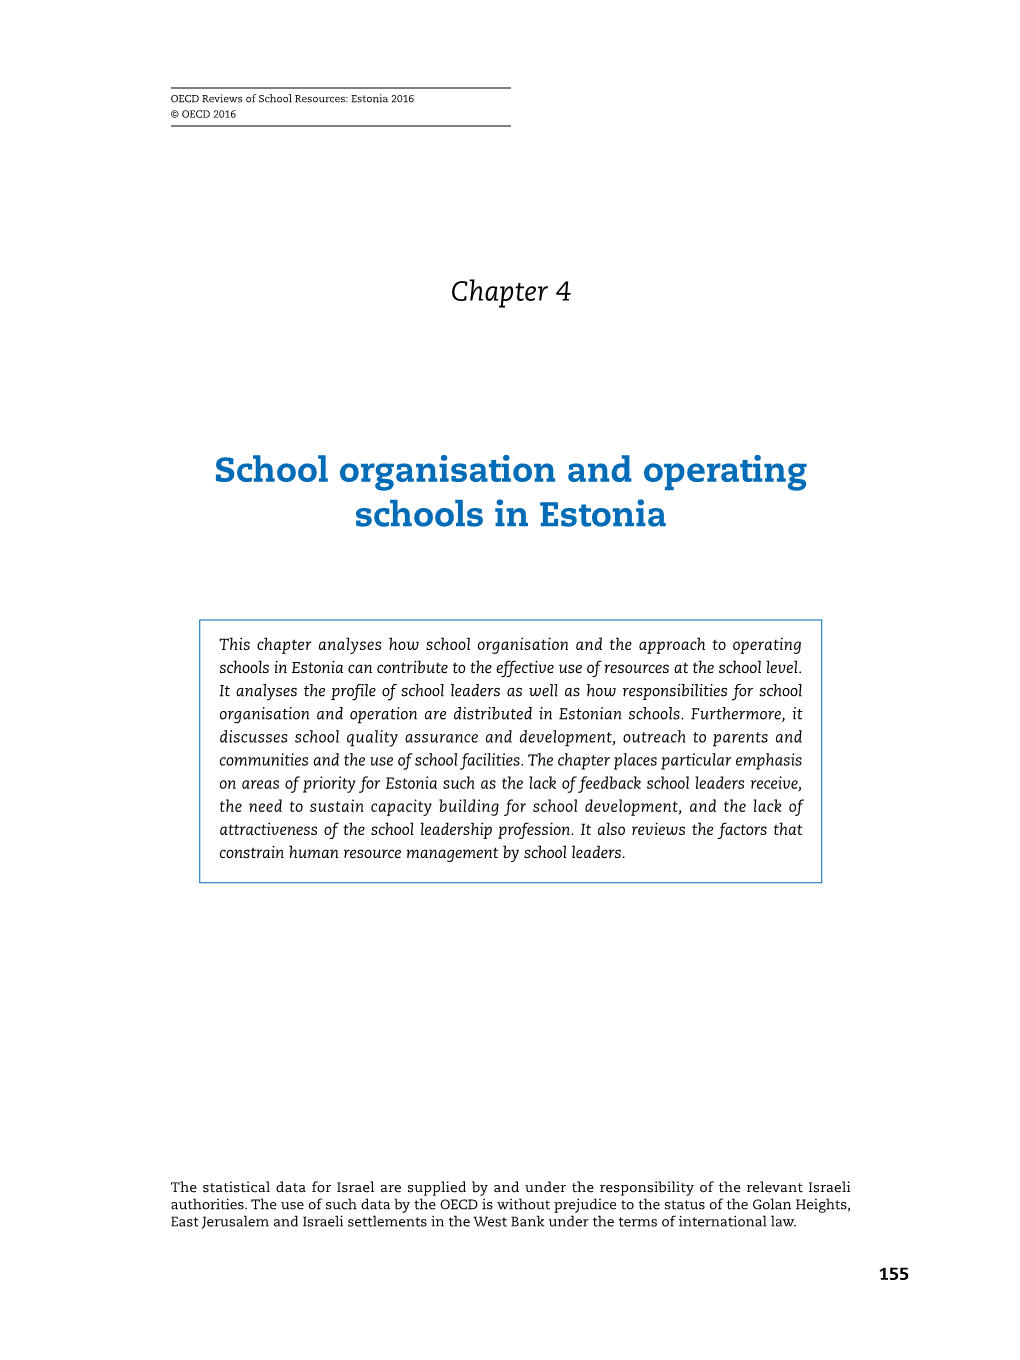 School Organisation and Operating Schools in Estonia